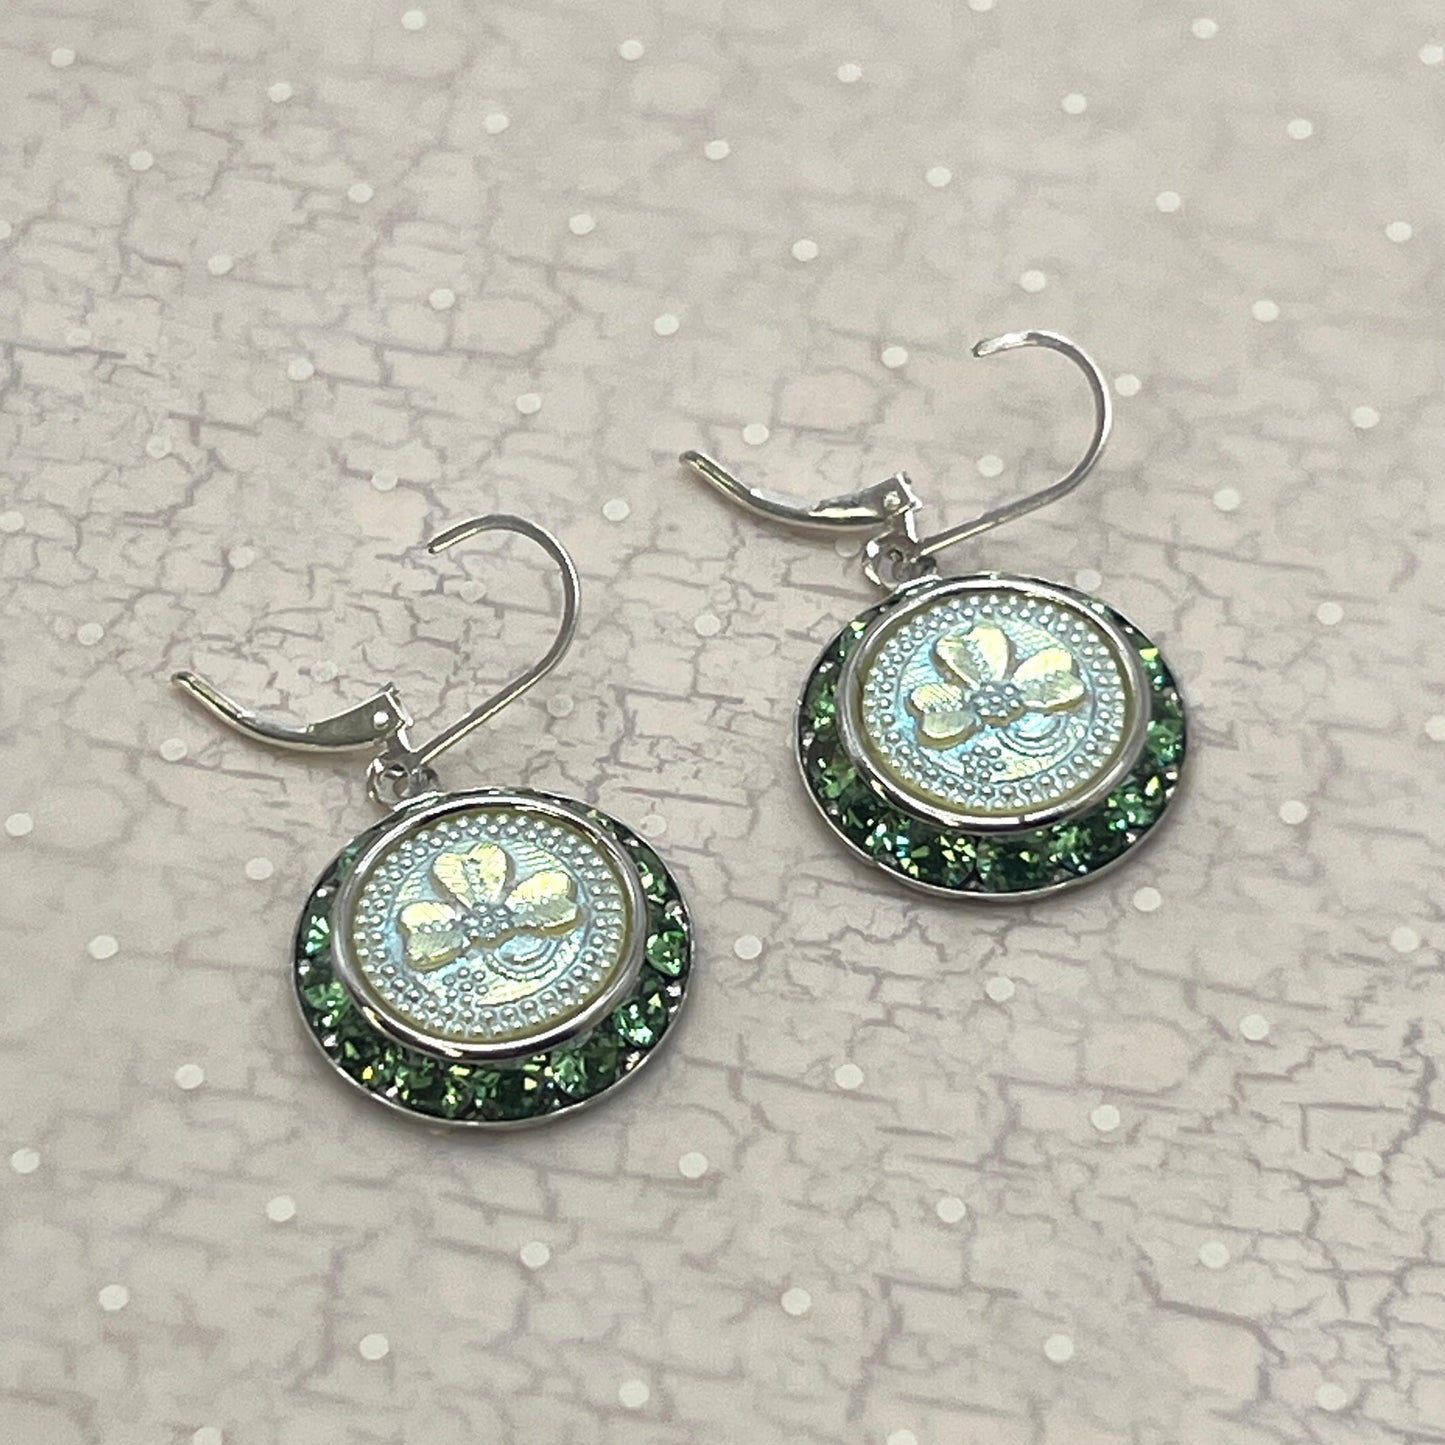 Irish Crystal Earrings, Uranium Glass Shamrock Buttons, Green St Patricks Day Jewelry, Gifts for Women